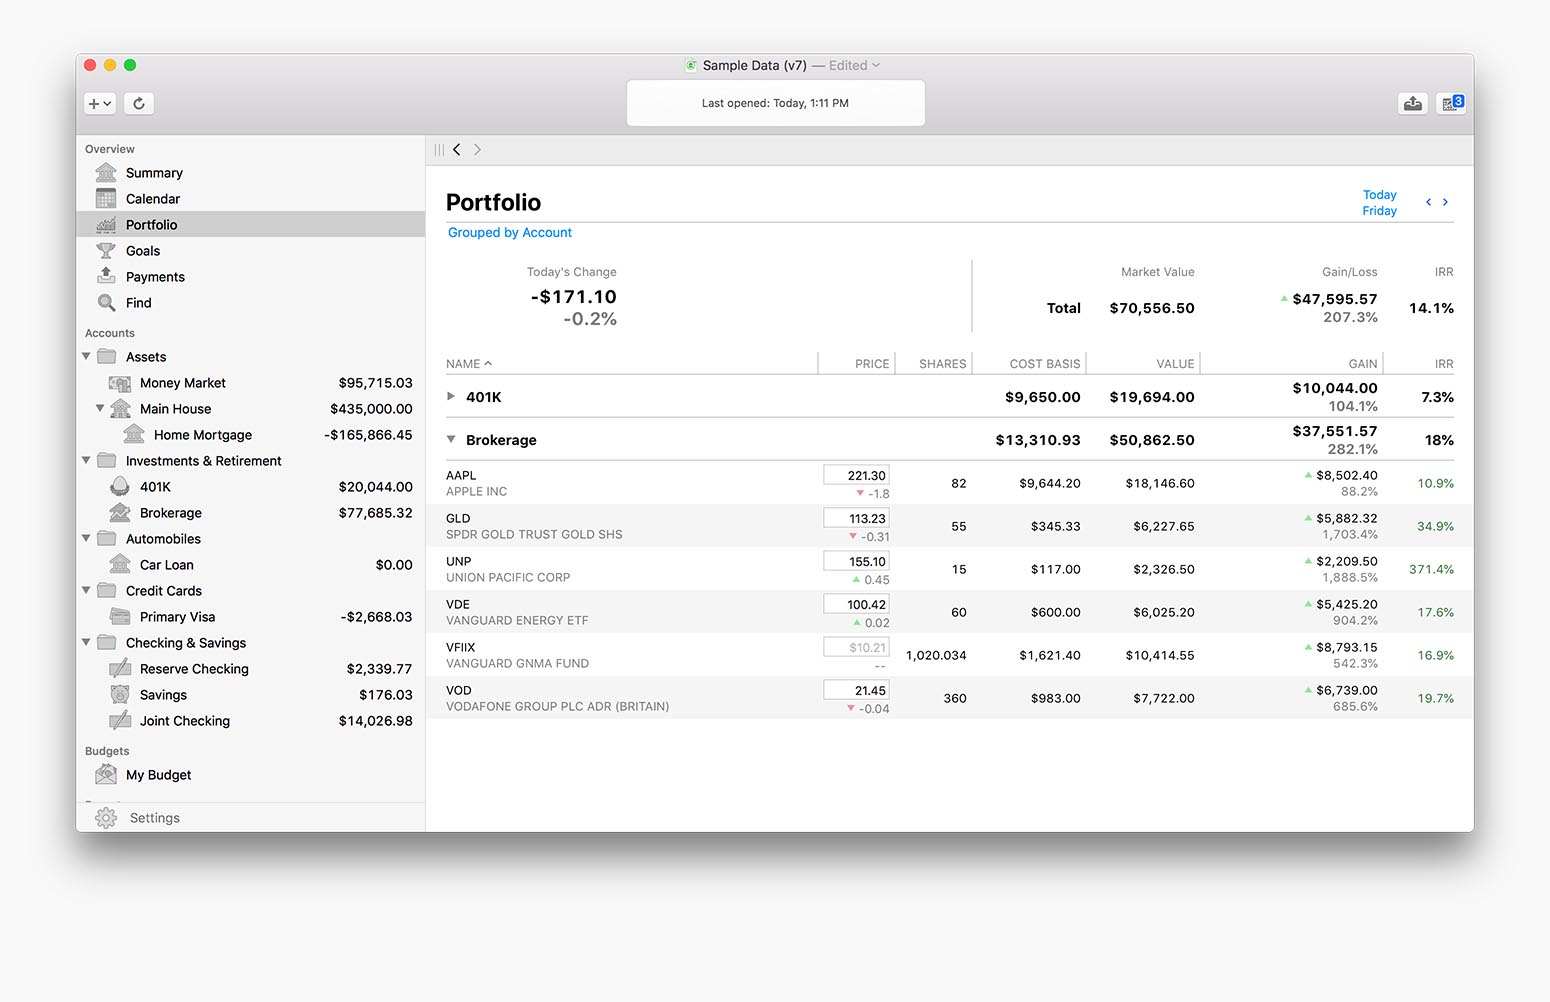 personal finance mac software